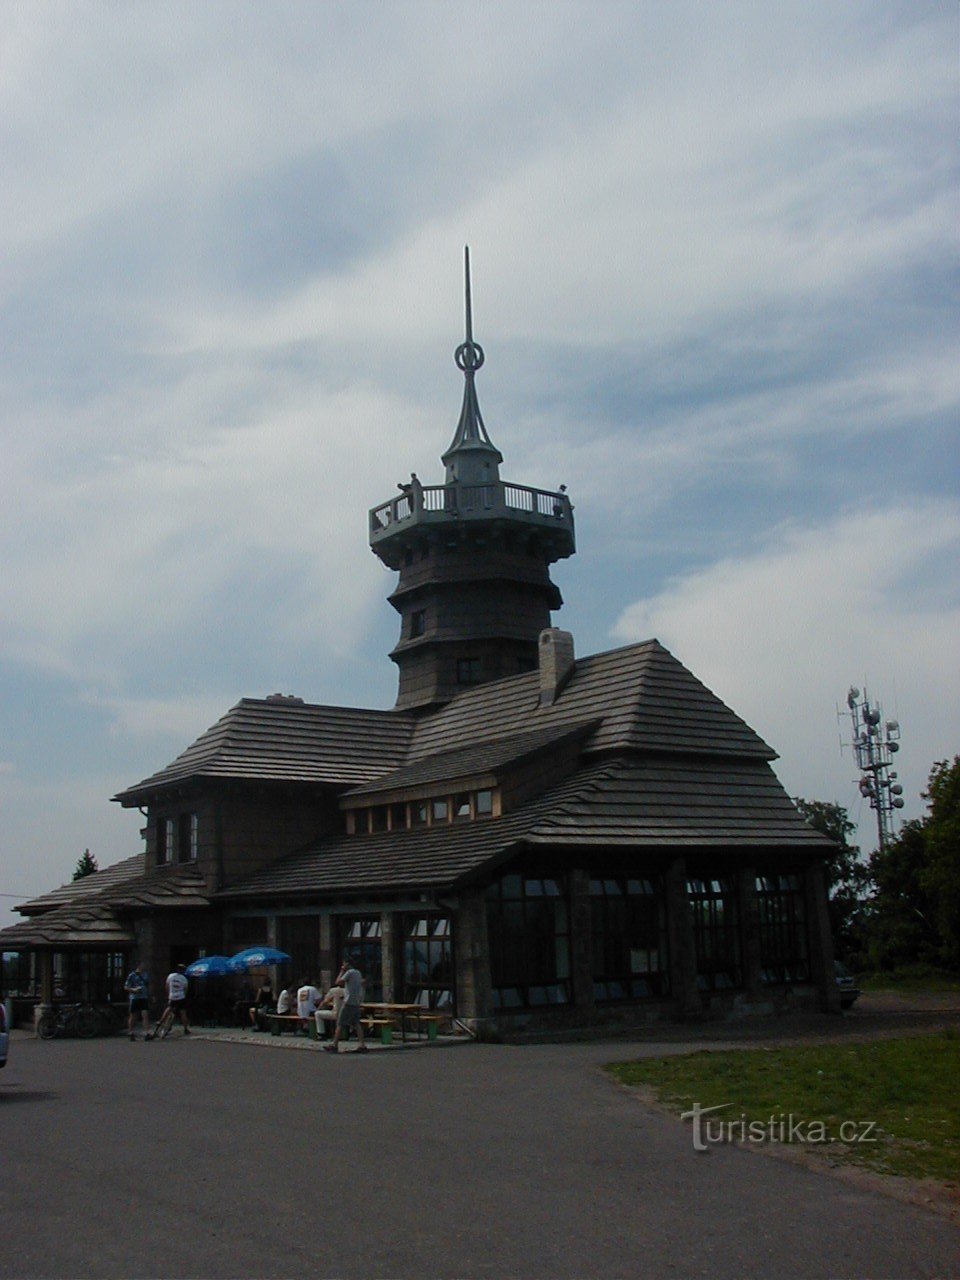 Utsiktstorn på Dobrošov - Jiráskova stuga